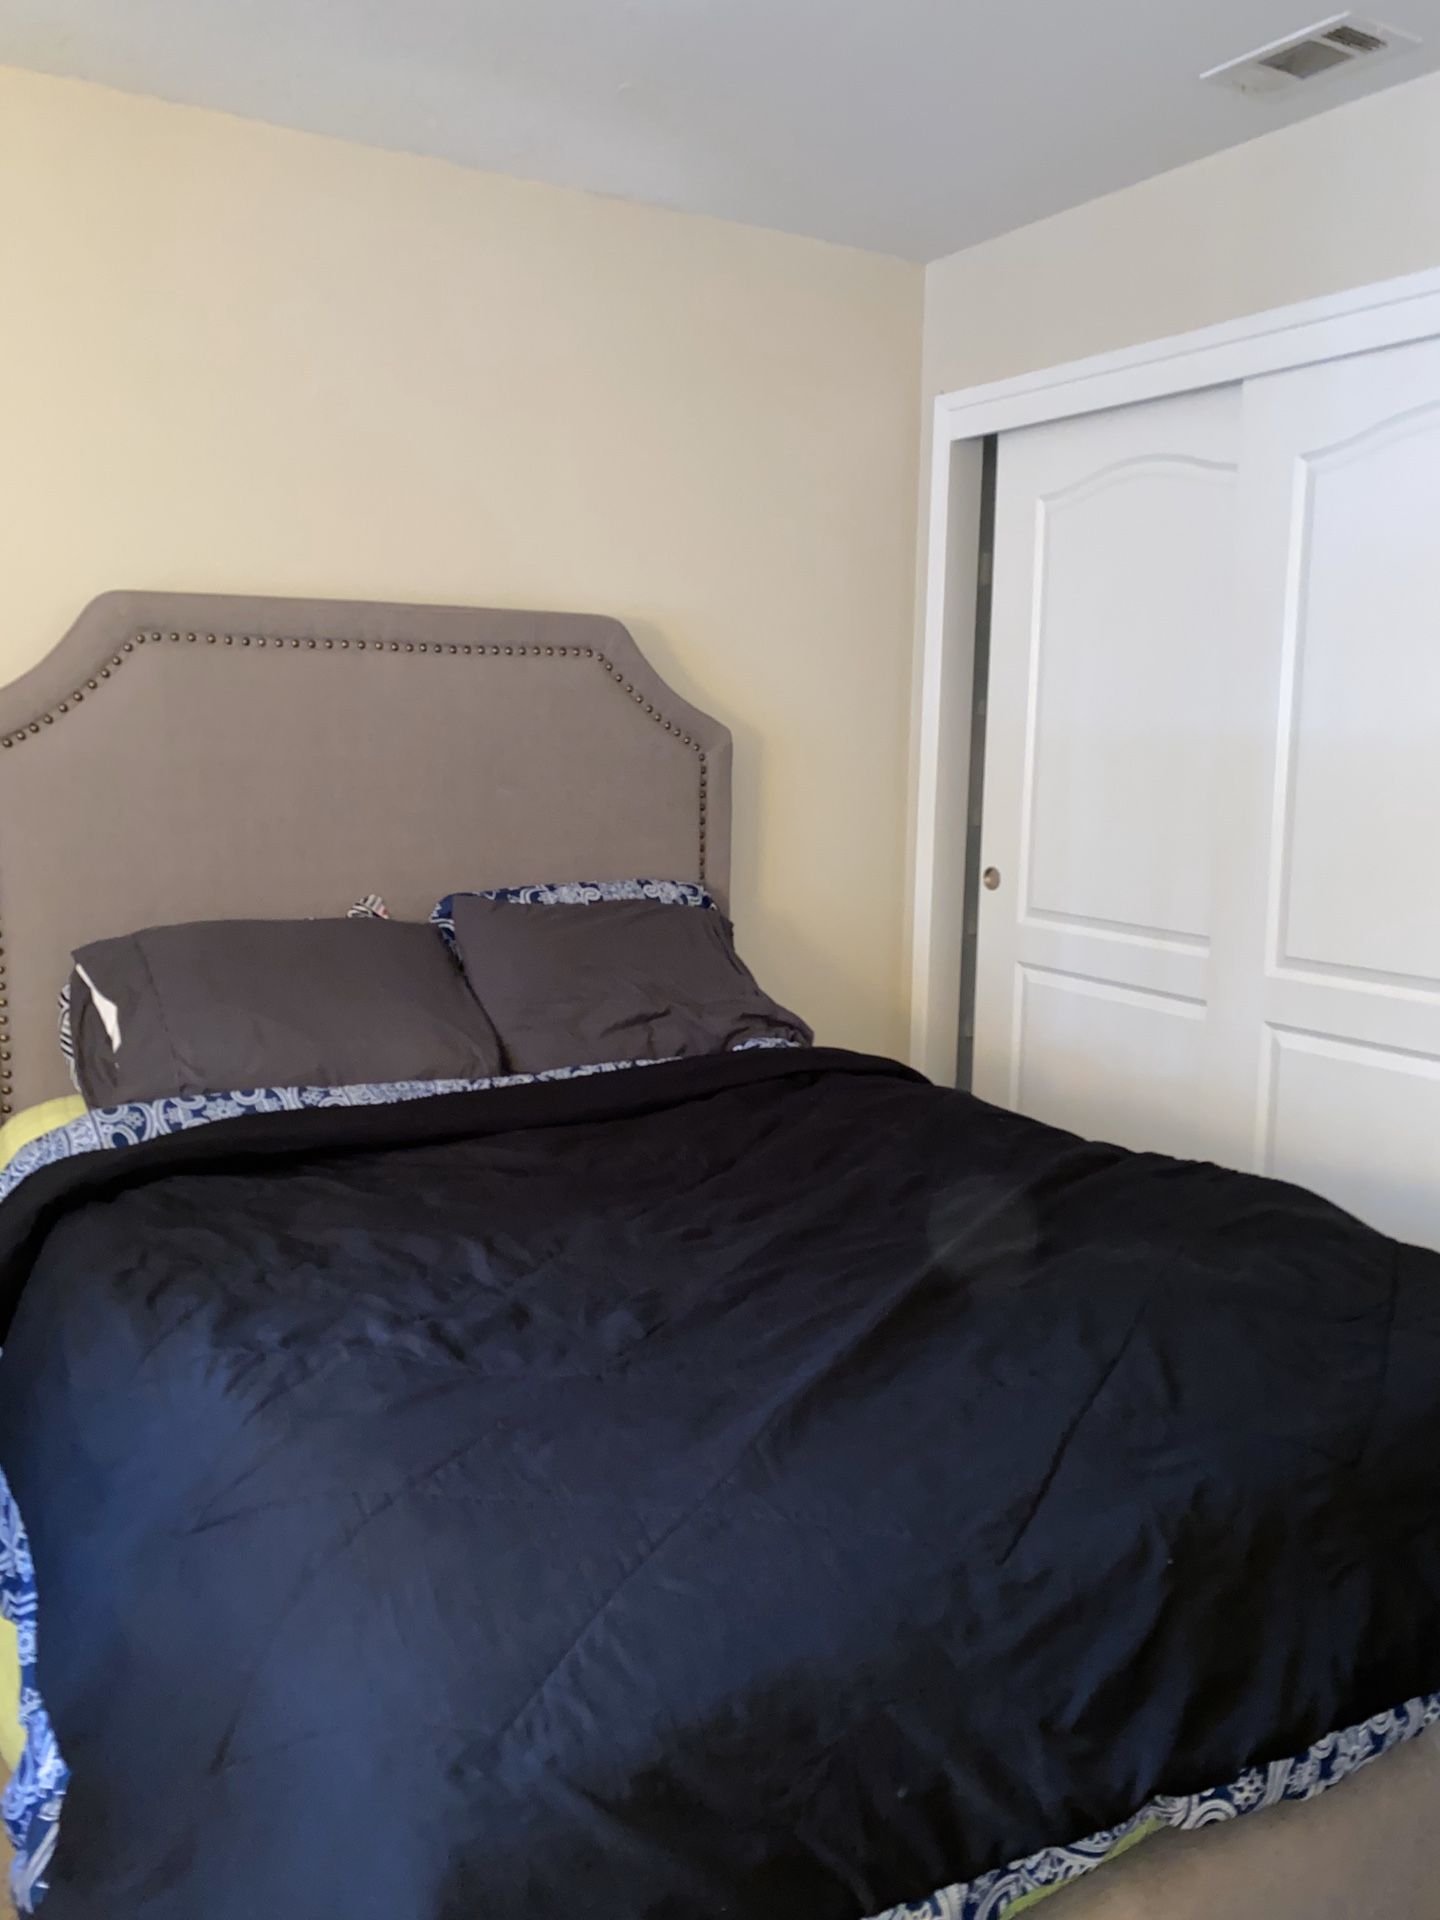 Bedframe With Grey Cloth Headboard